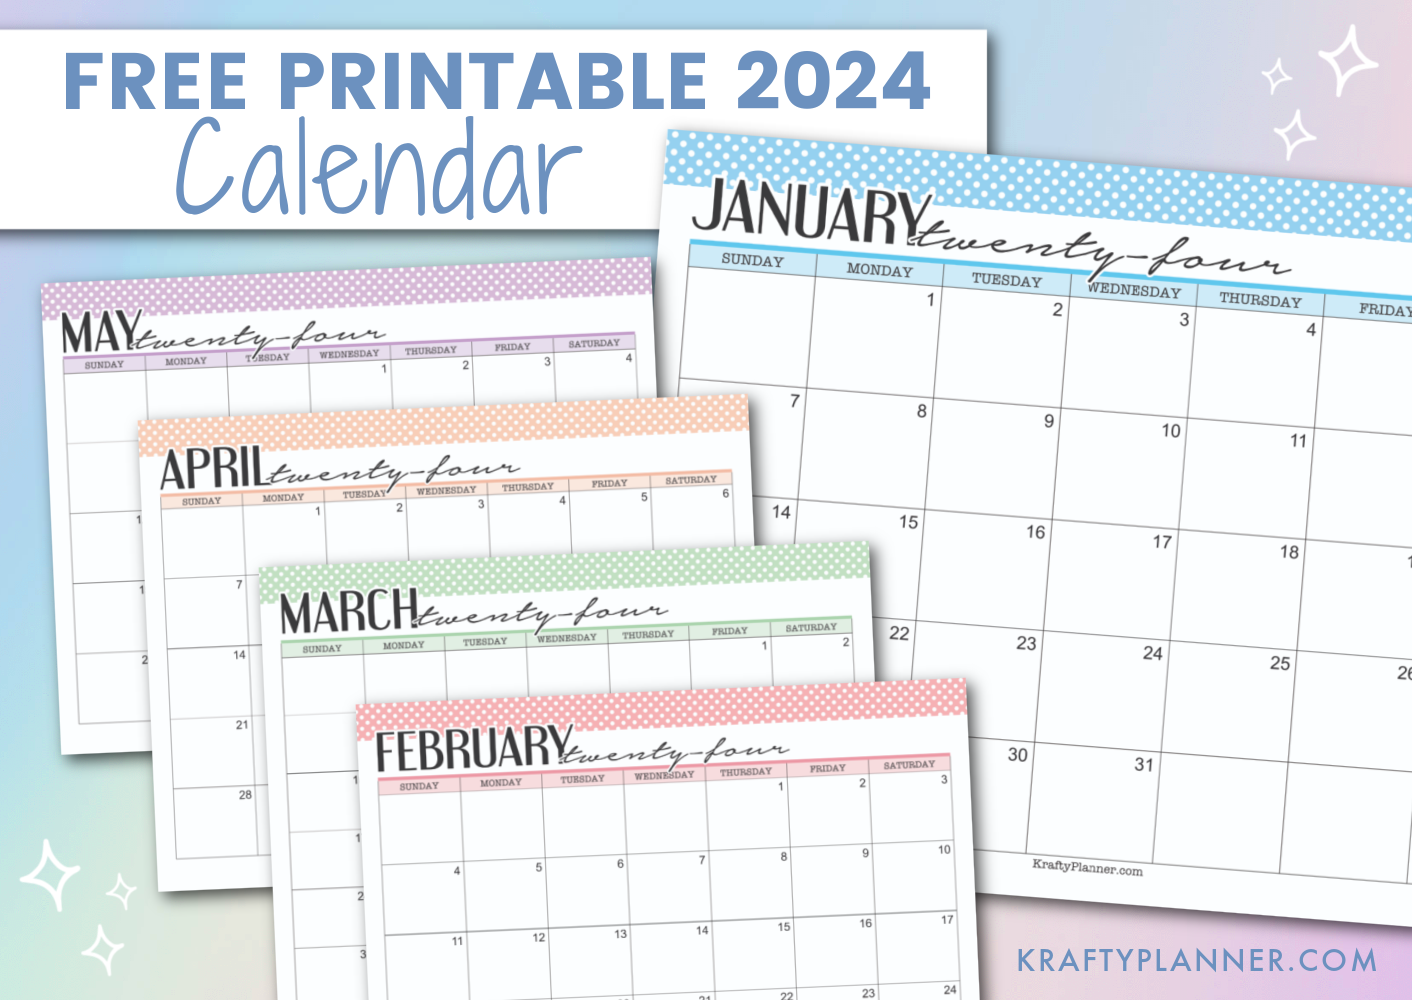 Free Printable 2024 Calendars (Color) — Krafty Planner for Color Calendar 2024 Printable